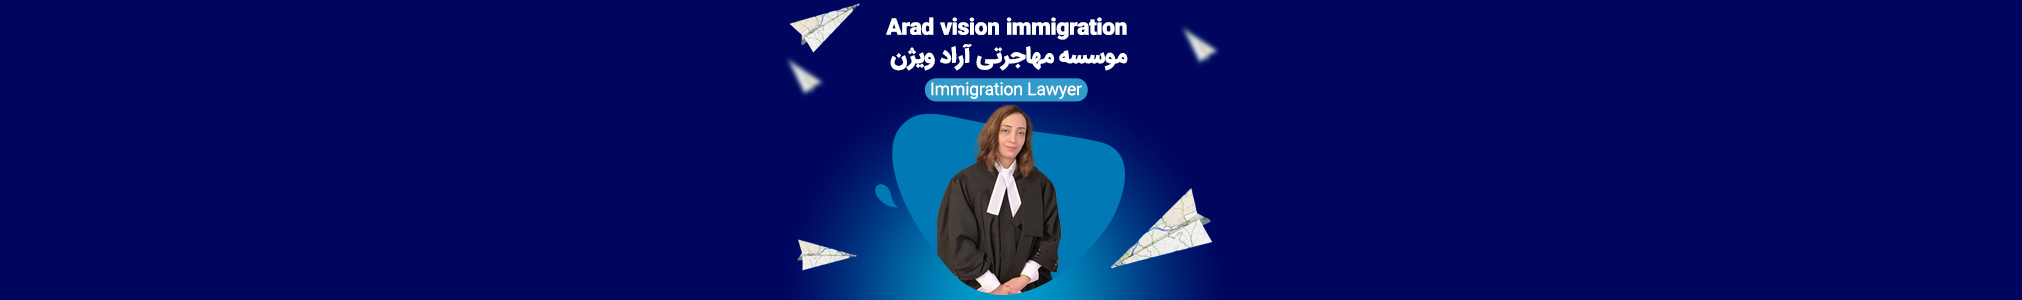 Arad Vision Immigration